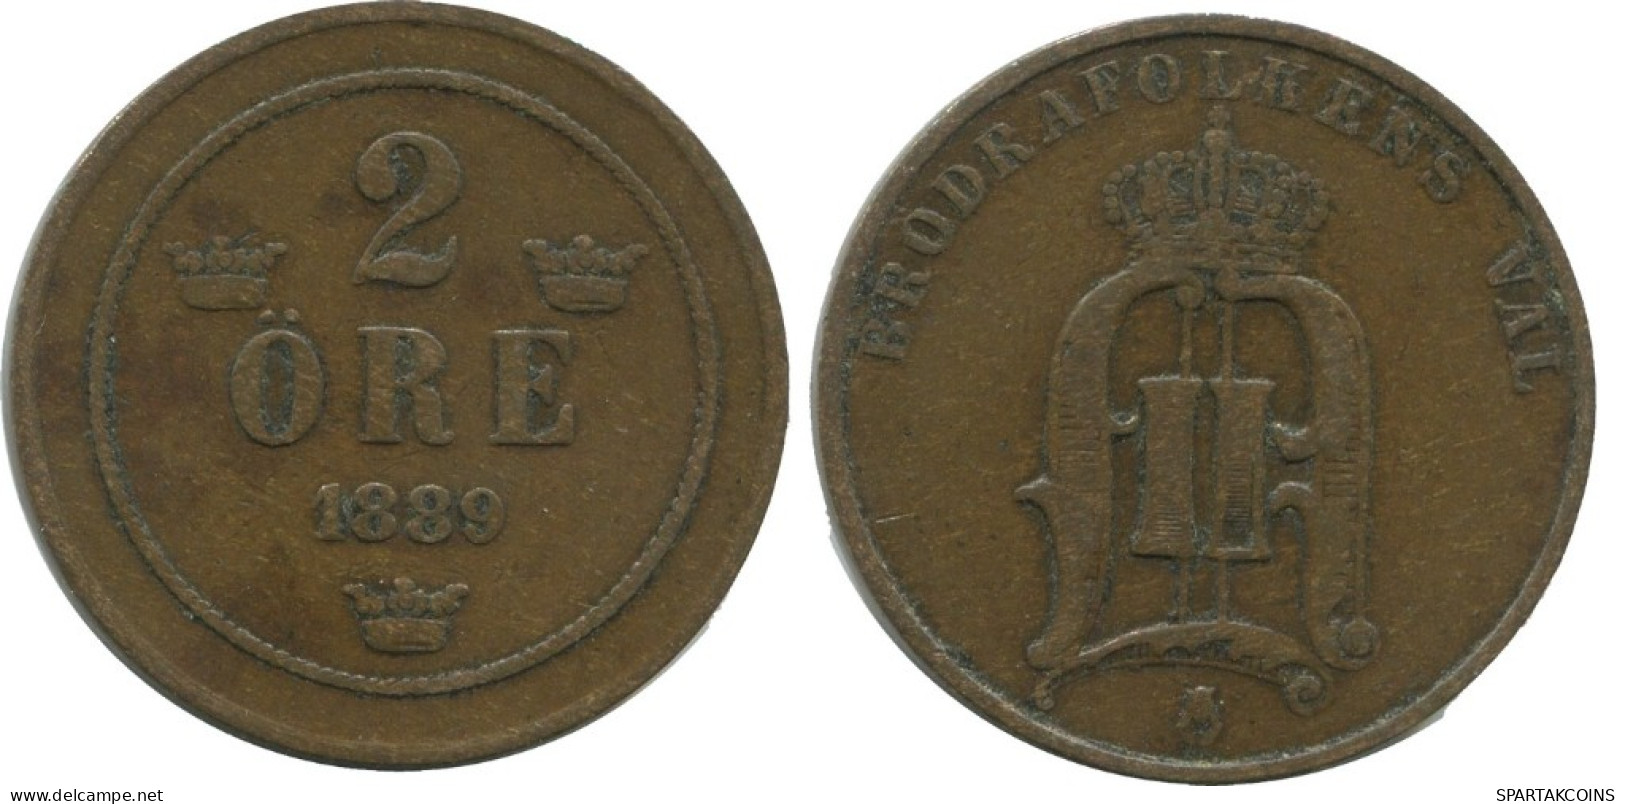 2 ORE 1889 SWEDEN Coin #AC930.2.U.A - Schweden